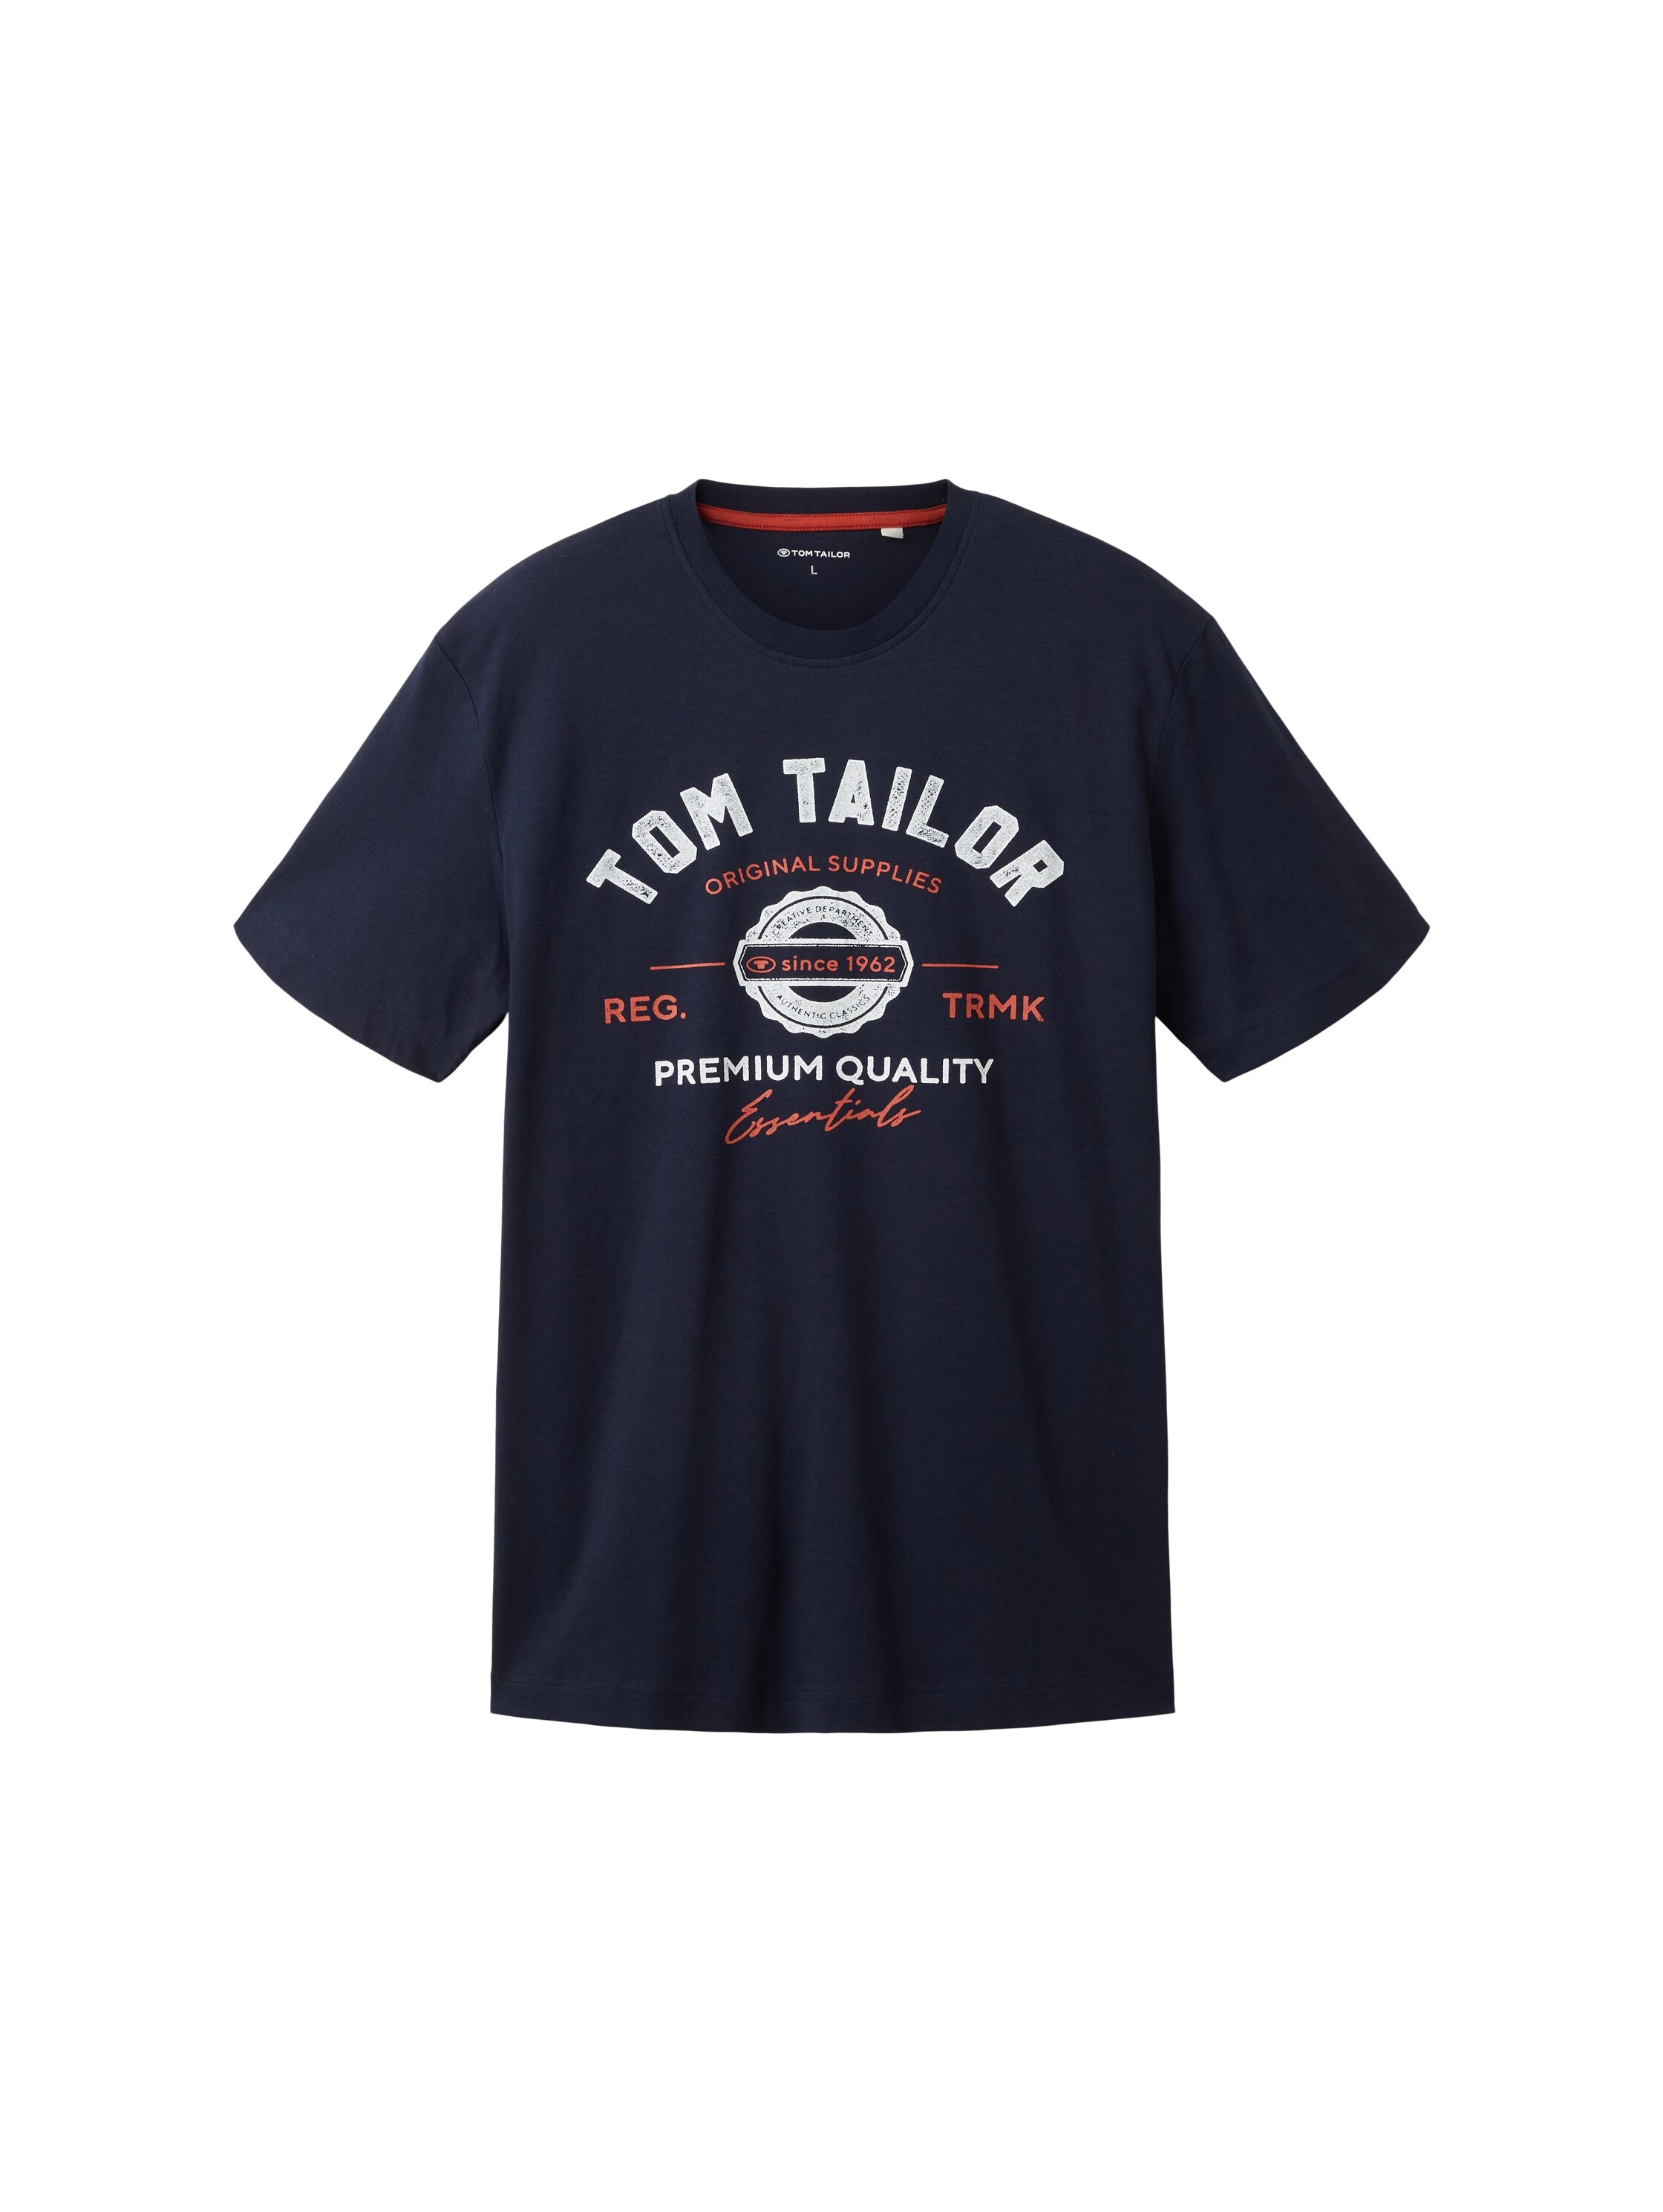 TOM TAILOR T-Shirt, mit großem shoppen bei OTTO Logofrontprint online